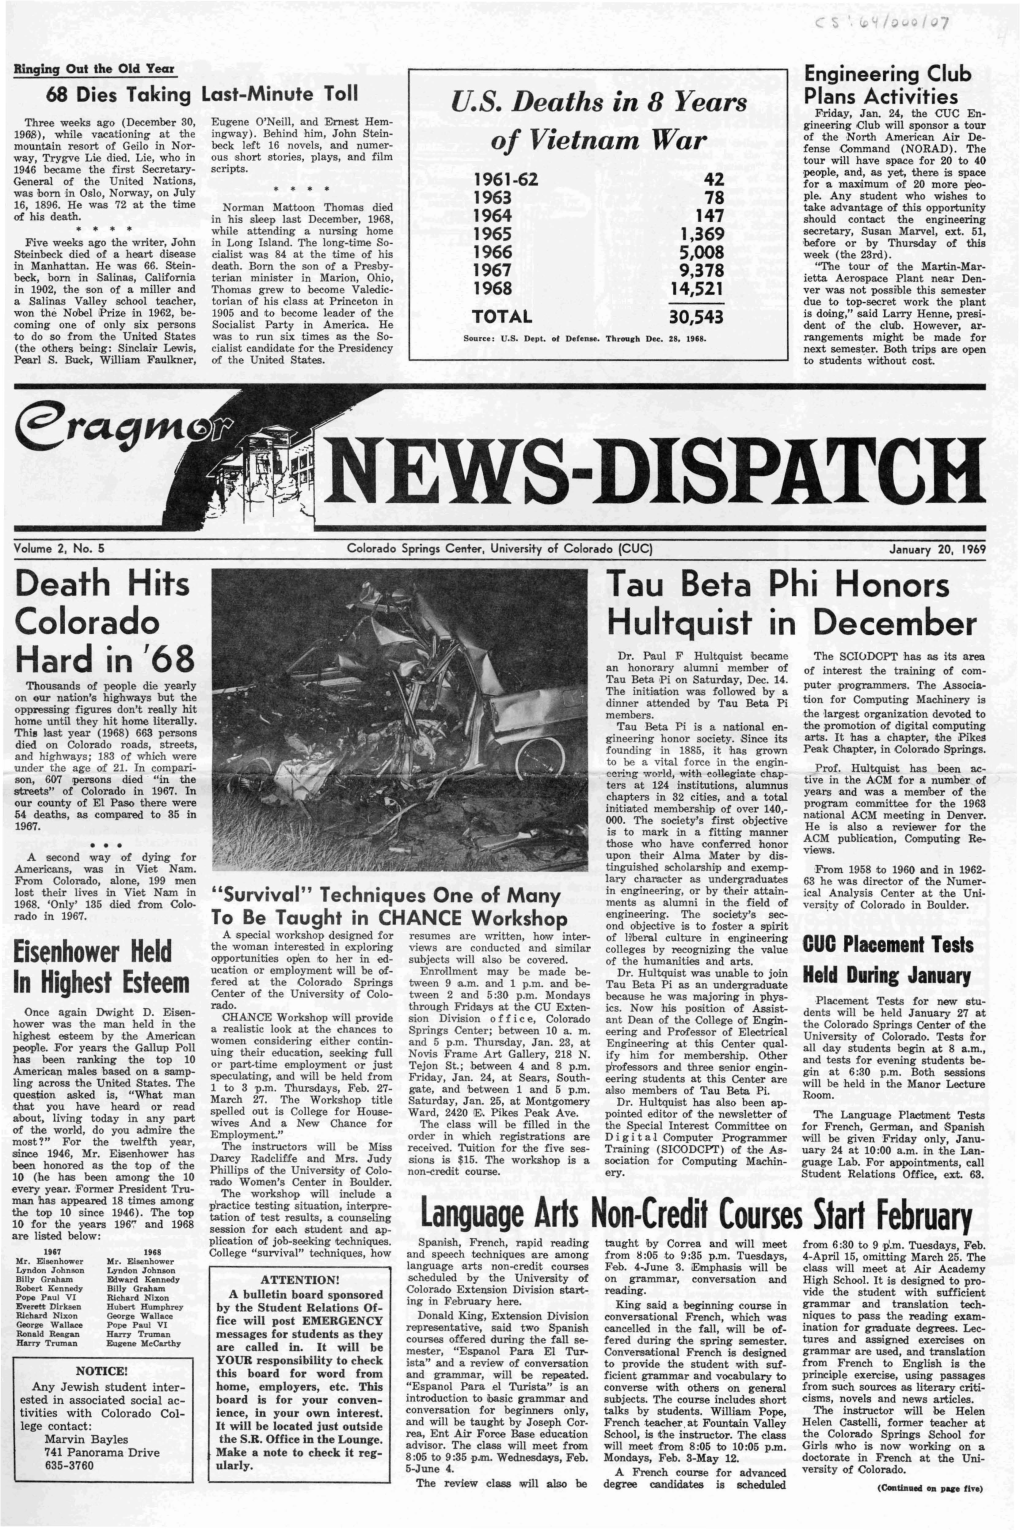 Cragmor News-Dispatch Vii, N5 (8.111Mb)